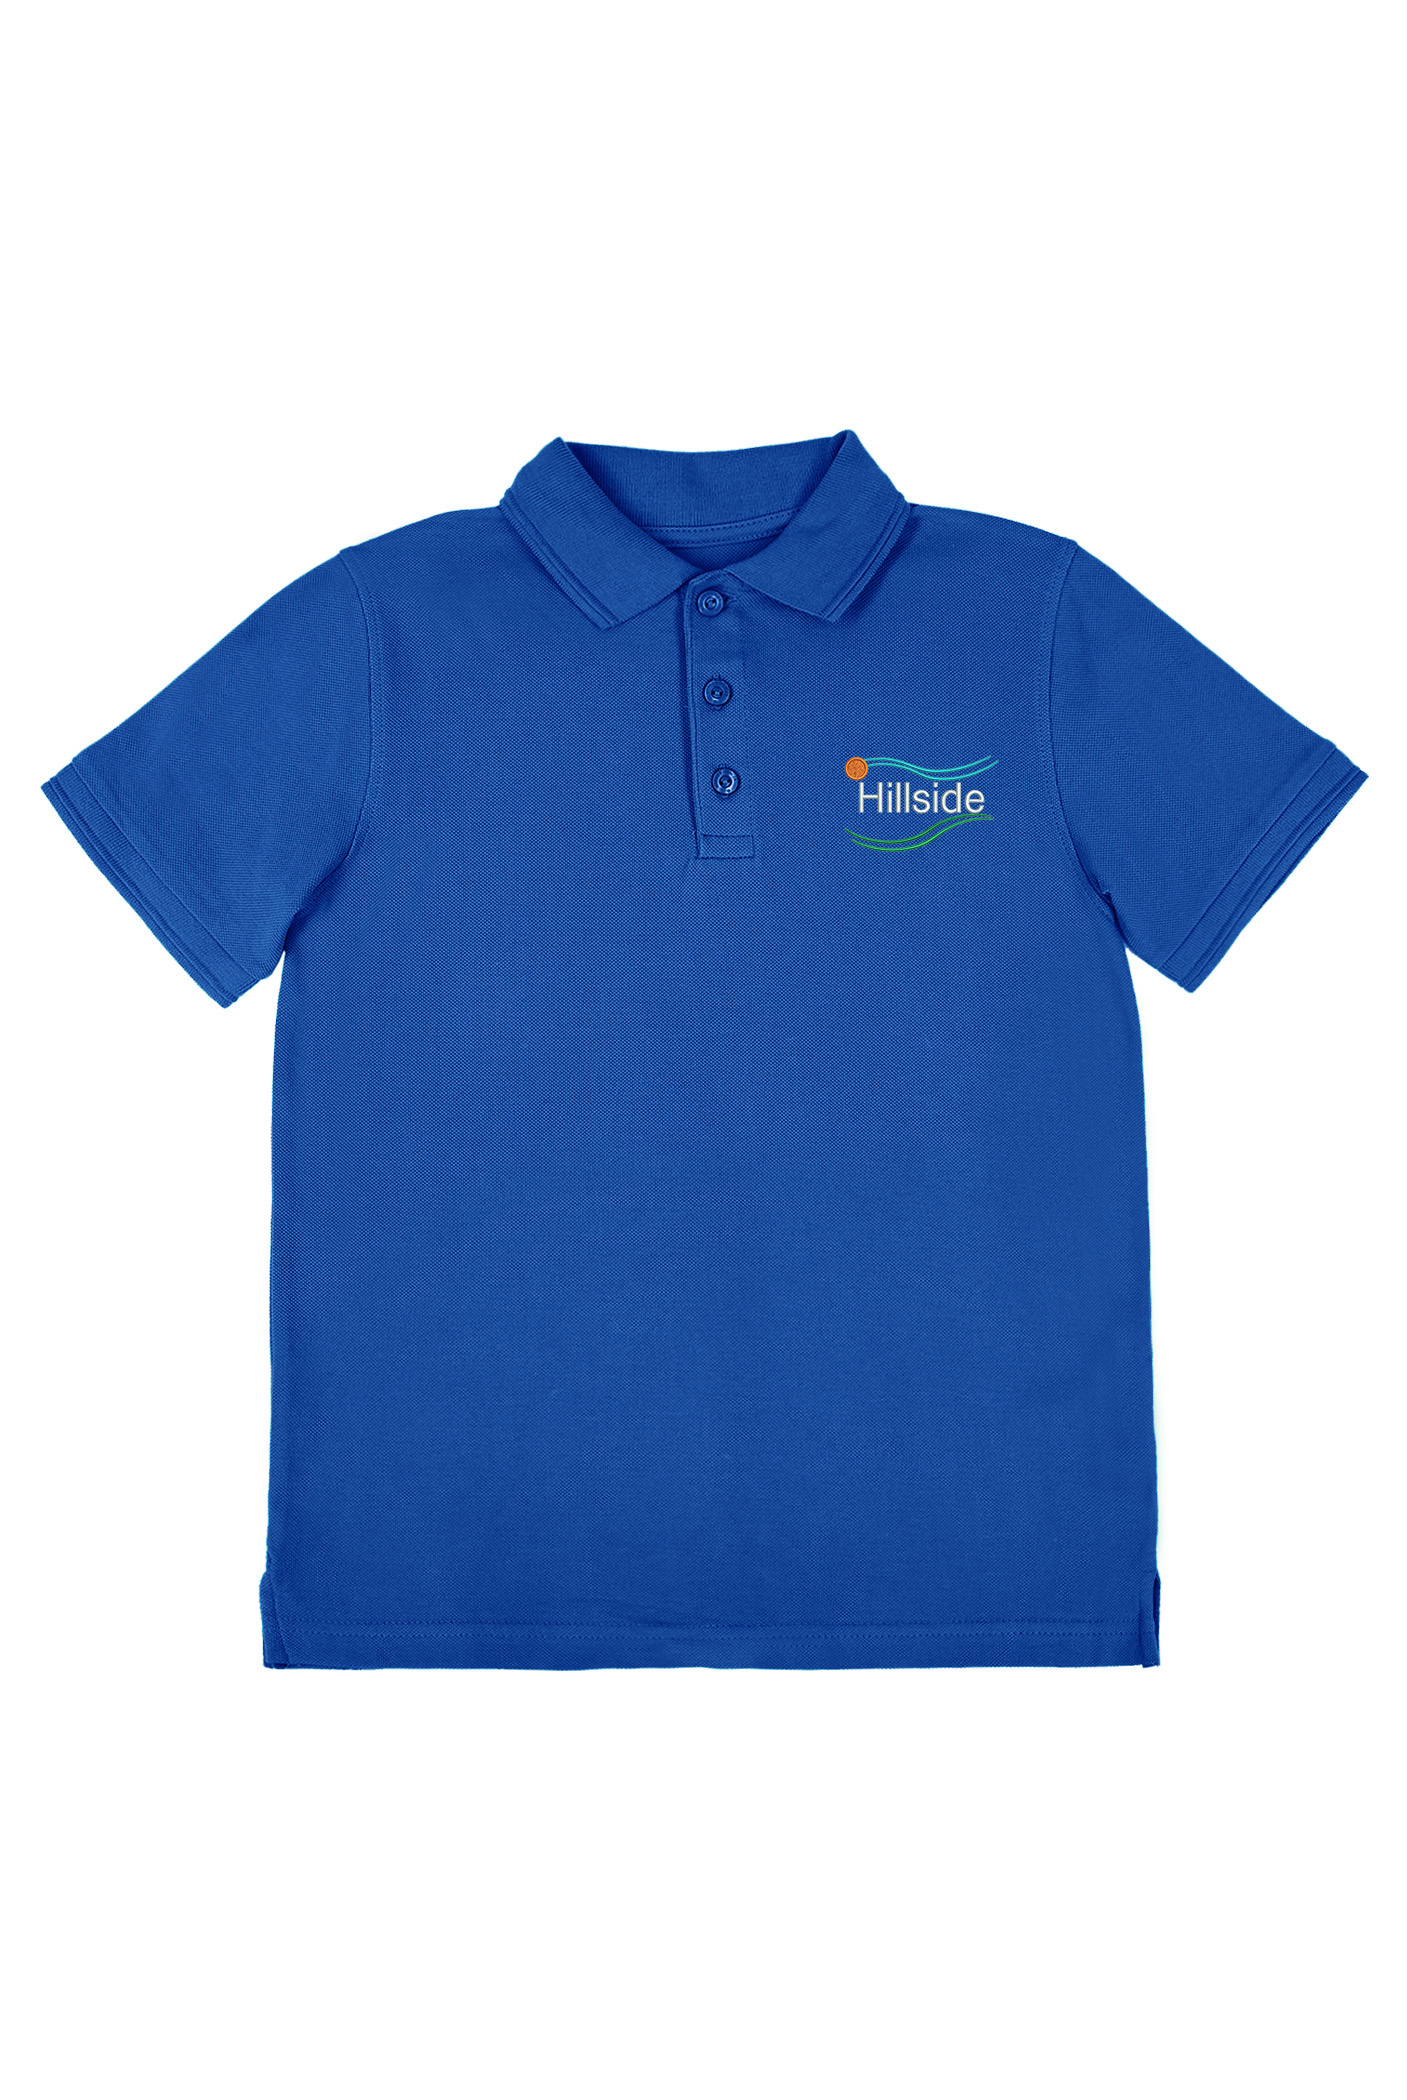 Hillside Special School Unisex S/S Cotton Polo Shirt